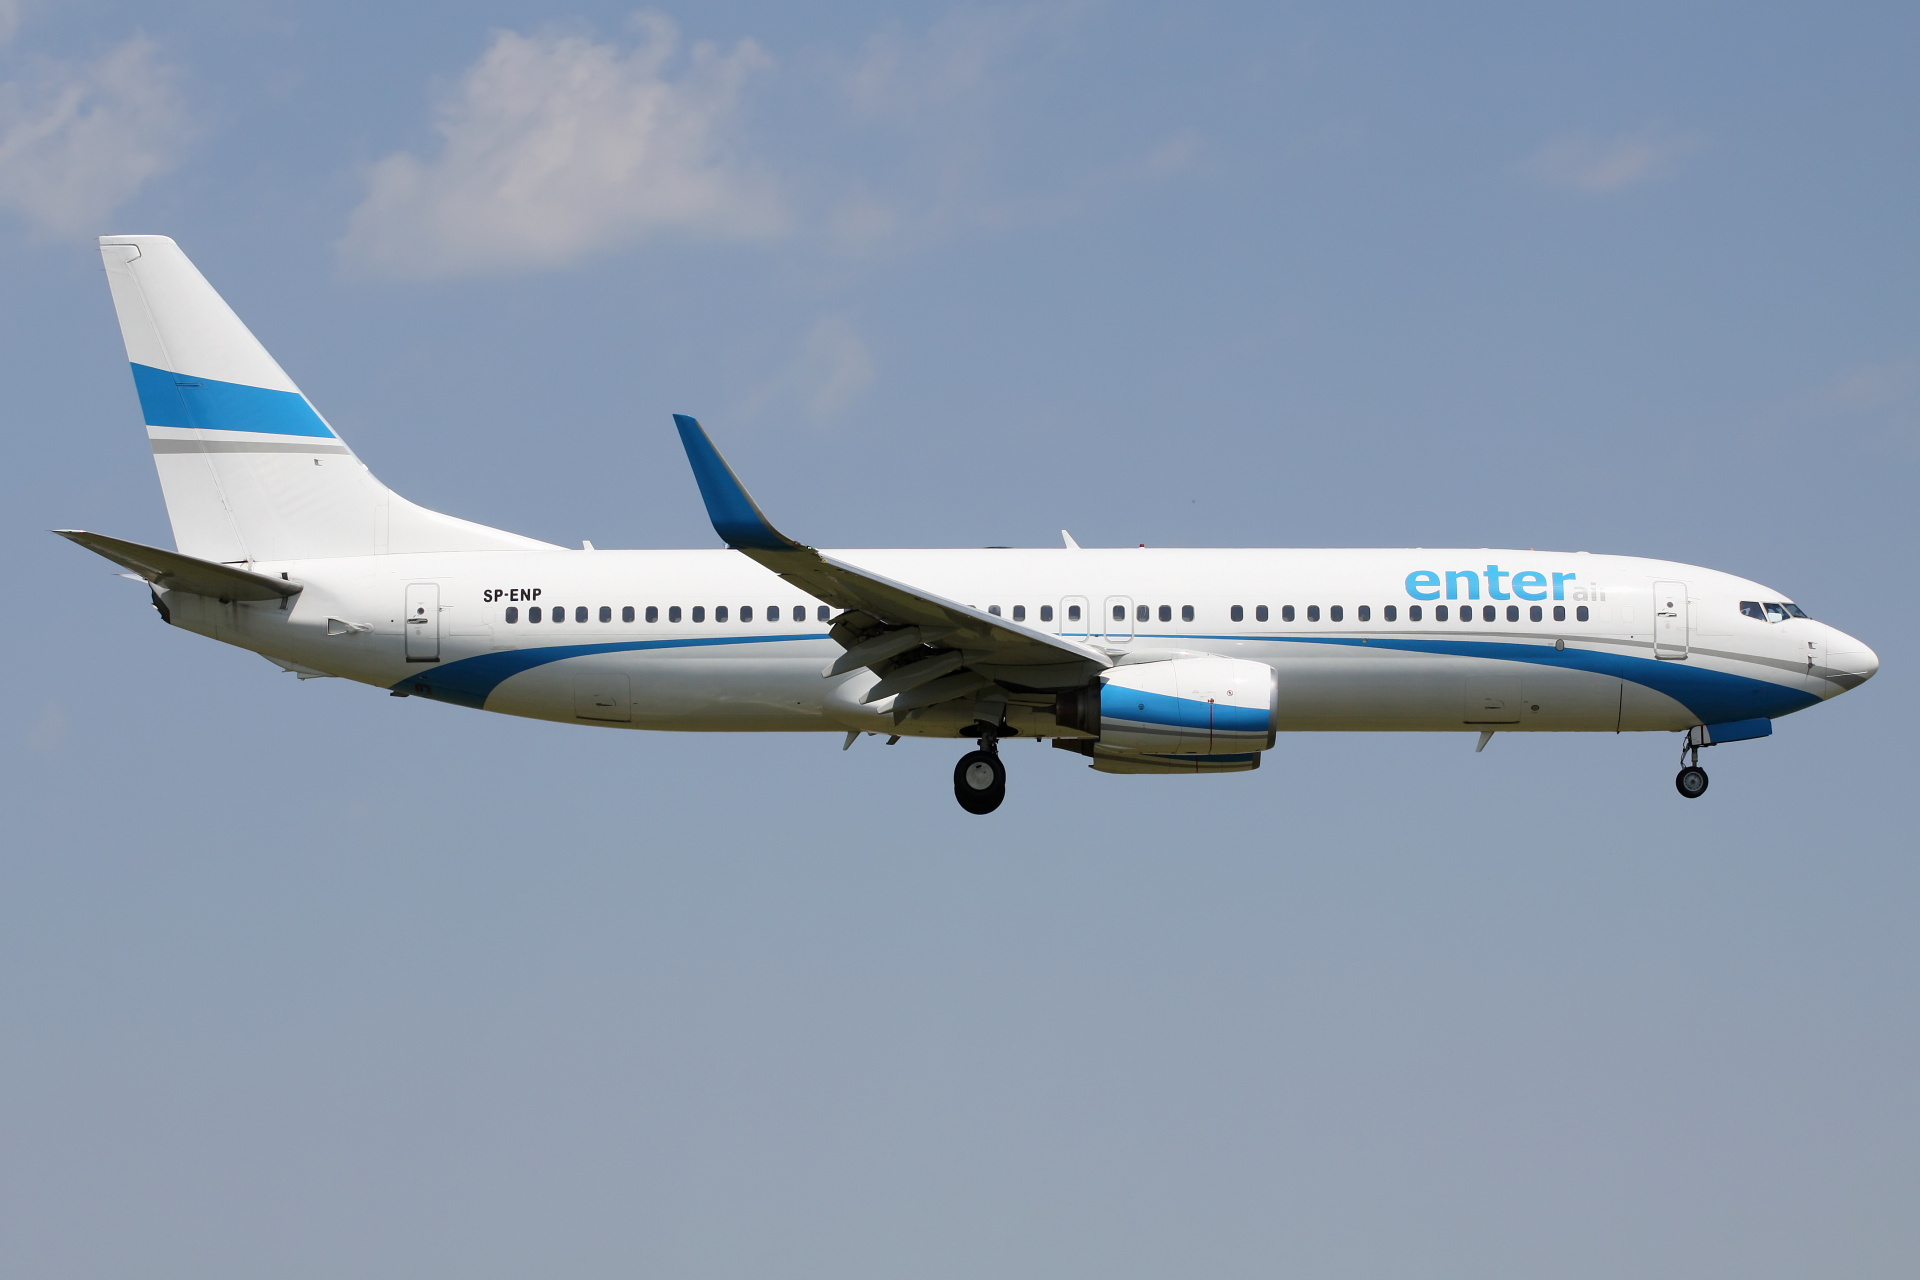 SP-ENP (Samoloty » Spotting na EPWA » Boeing 737-800 » Enter Air)